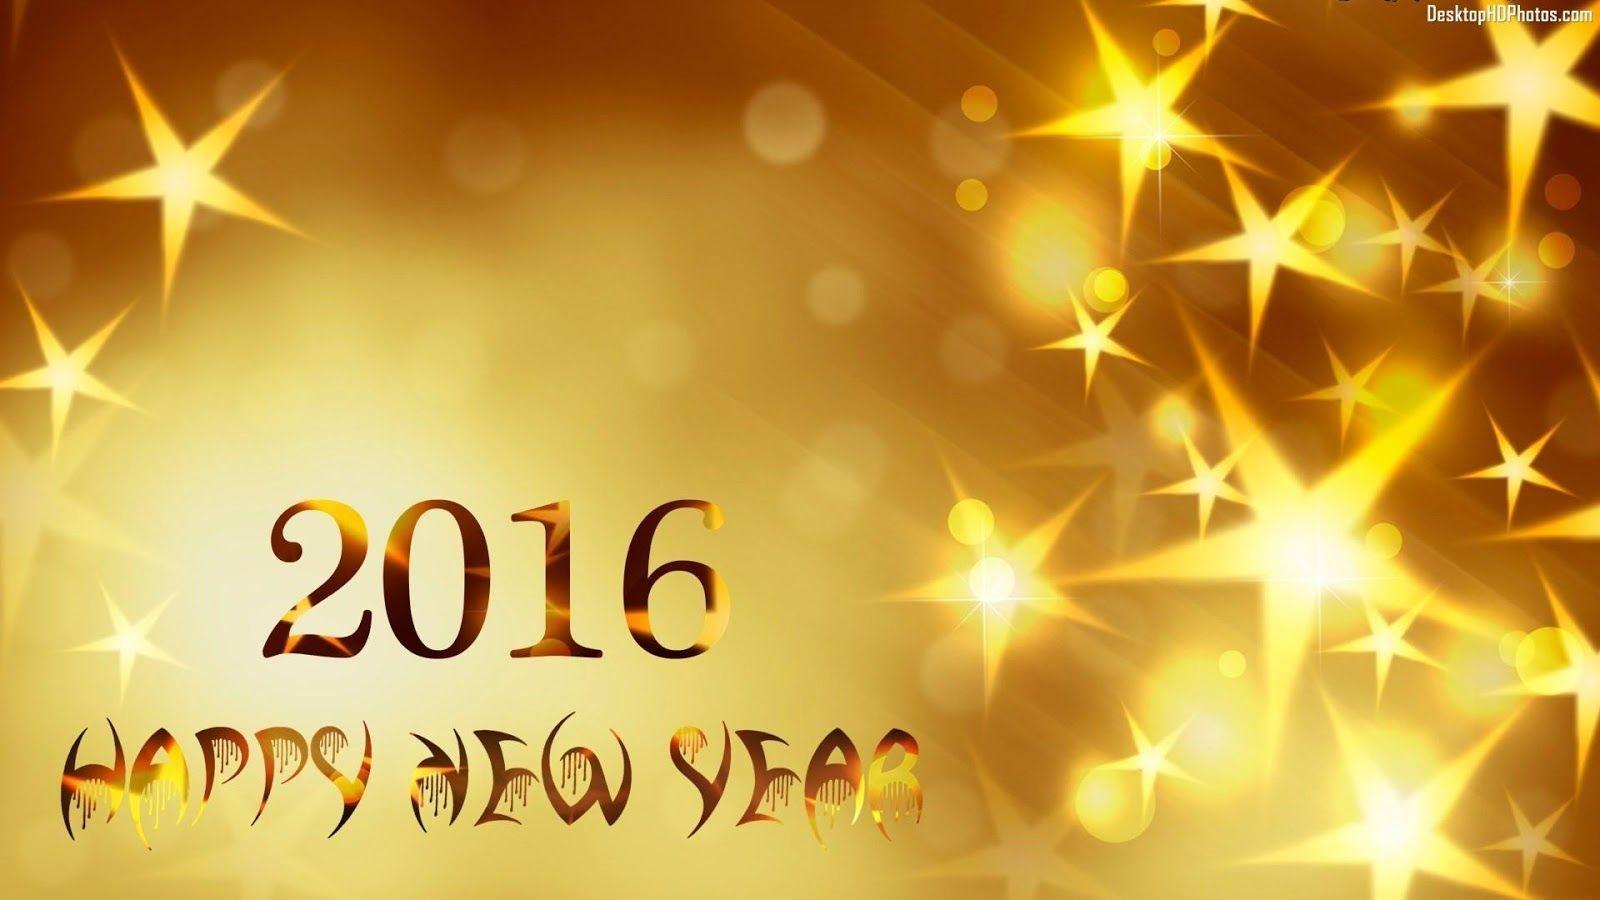 Happy New Year 2016 Wallpaper HD. Happy New Year 2016 Wallpaper HD